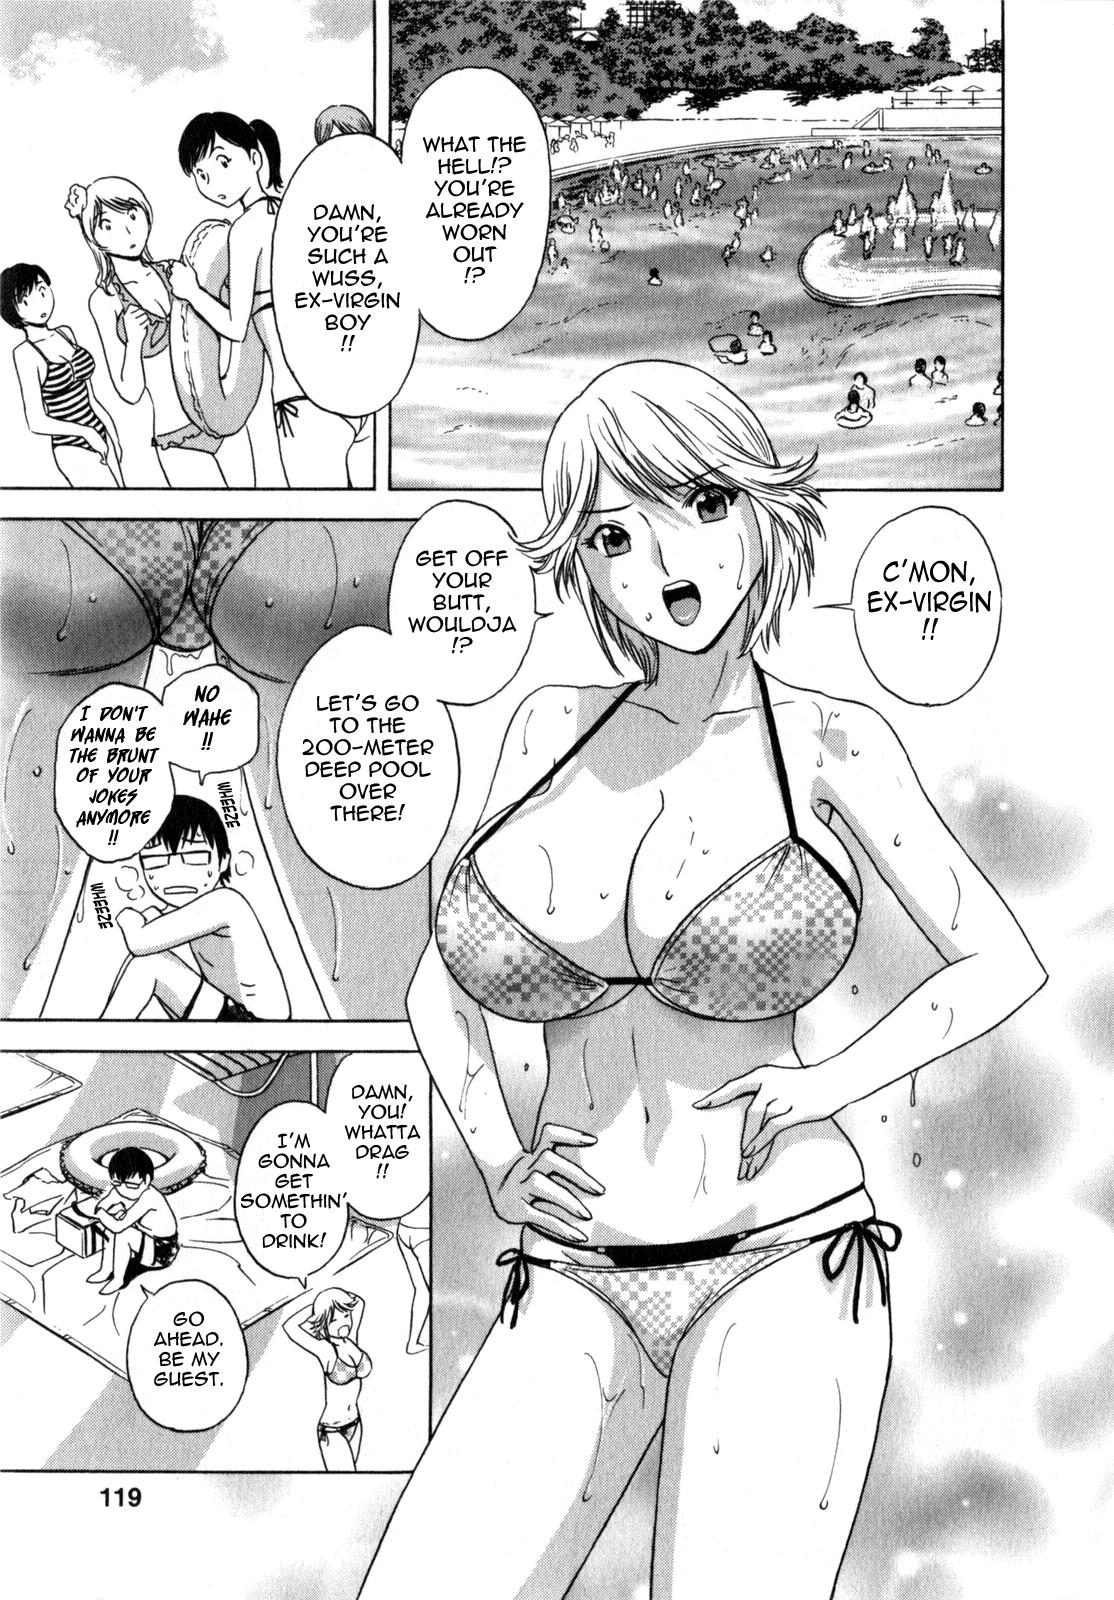 [Hidemaru] Life with Married Women Just Like a Manga 1 - Ch. 1-7 [English] {Tadanohito} 125